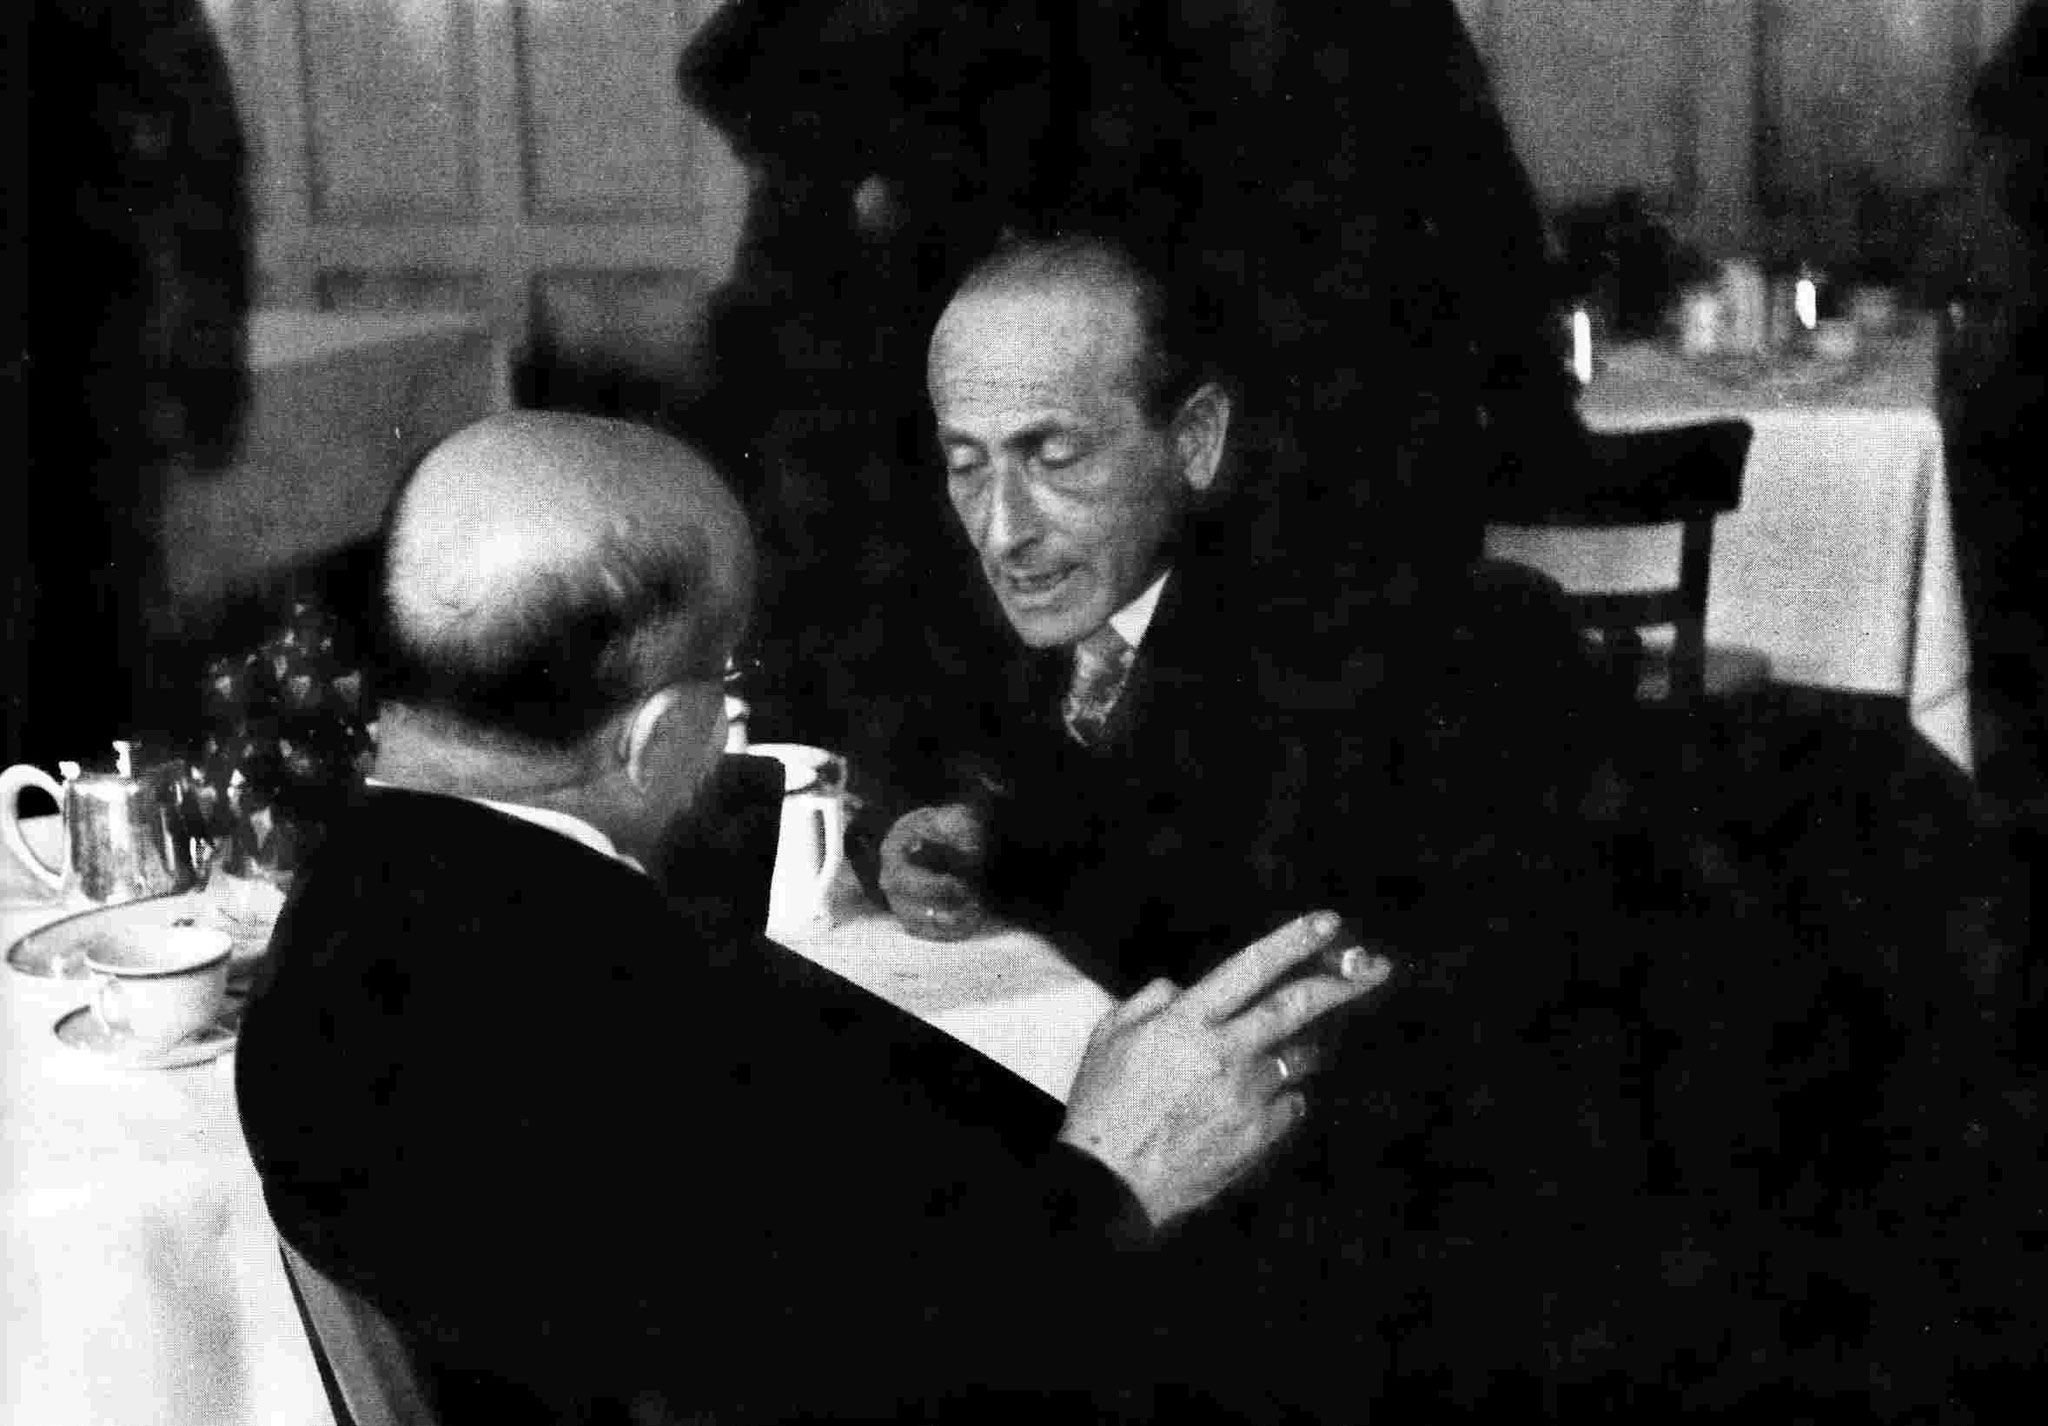 Max Eitingon und Karl Landauer, IPV-Kongress 1934, Luzern